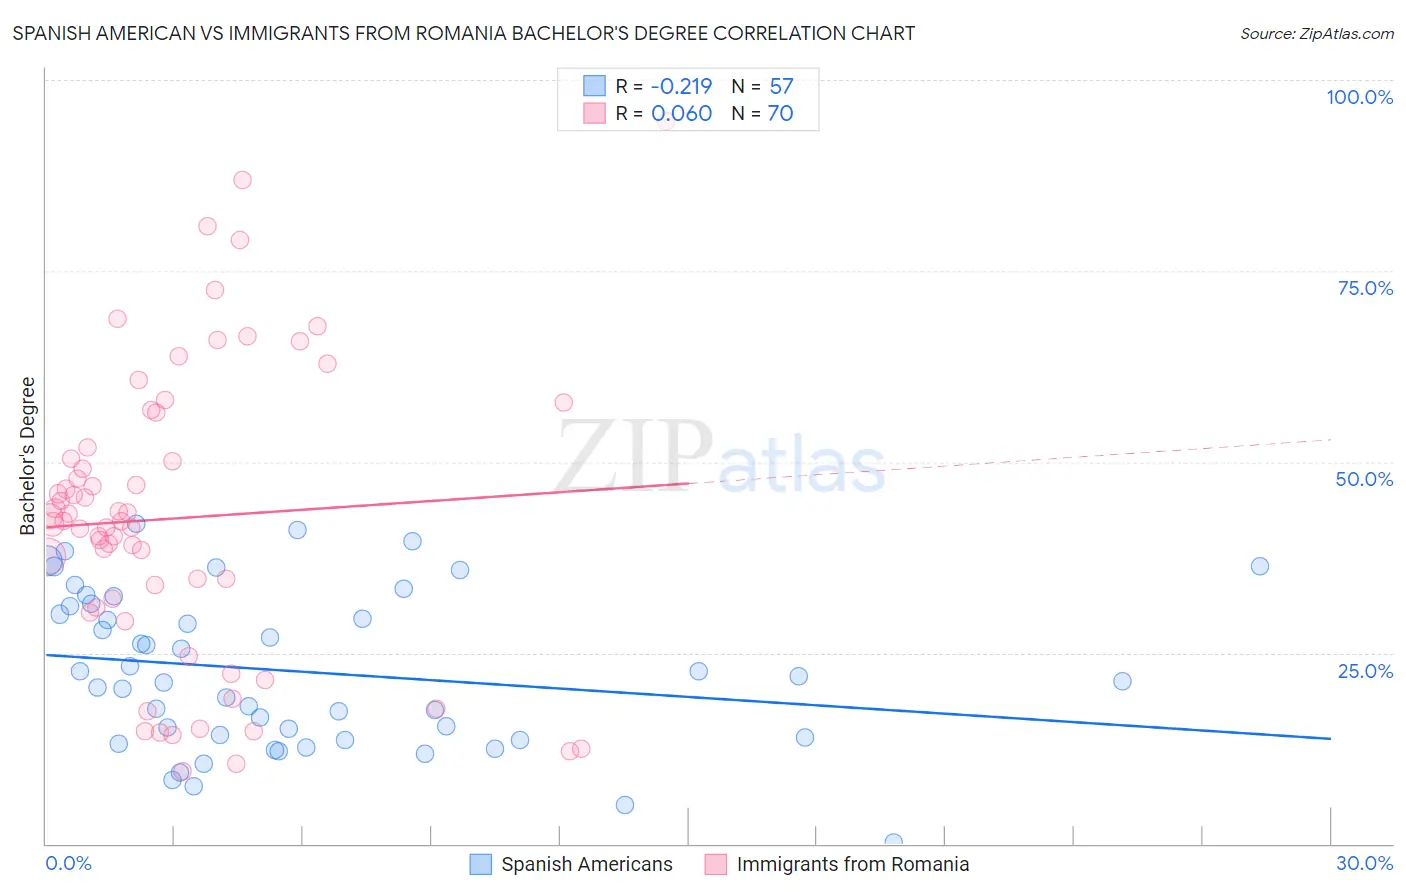 Spanish American vs Immigrants from Romania Bachelor's Degree